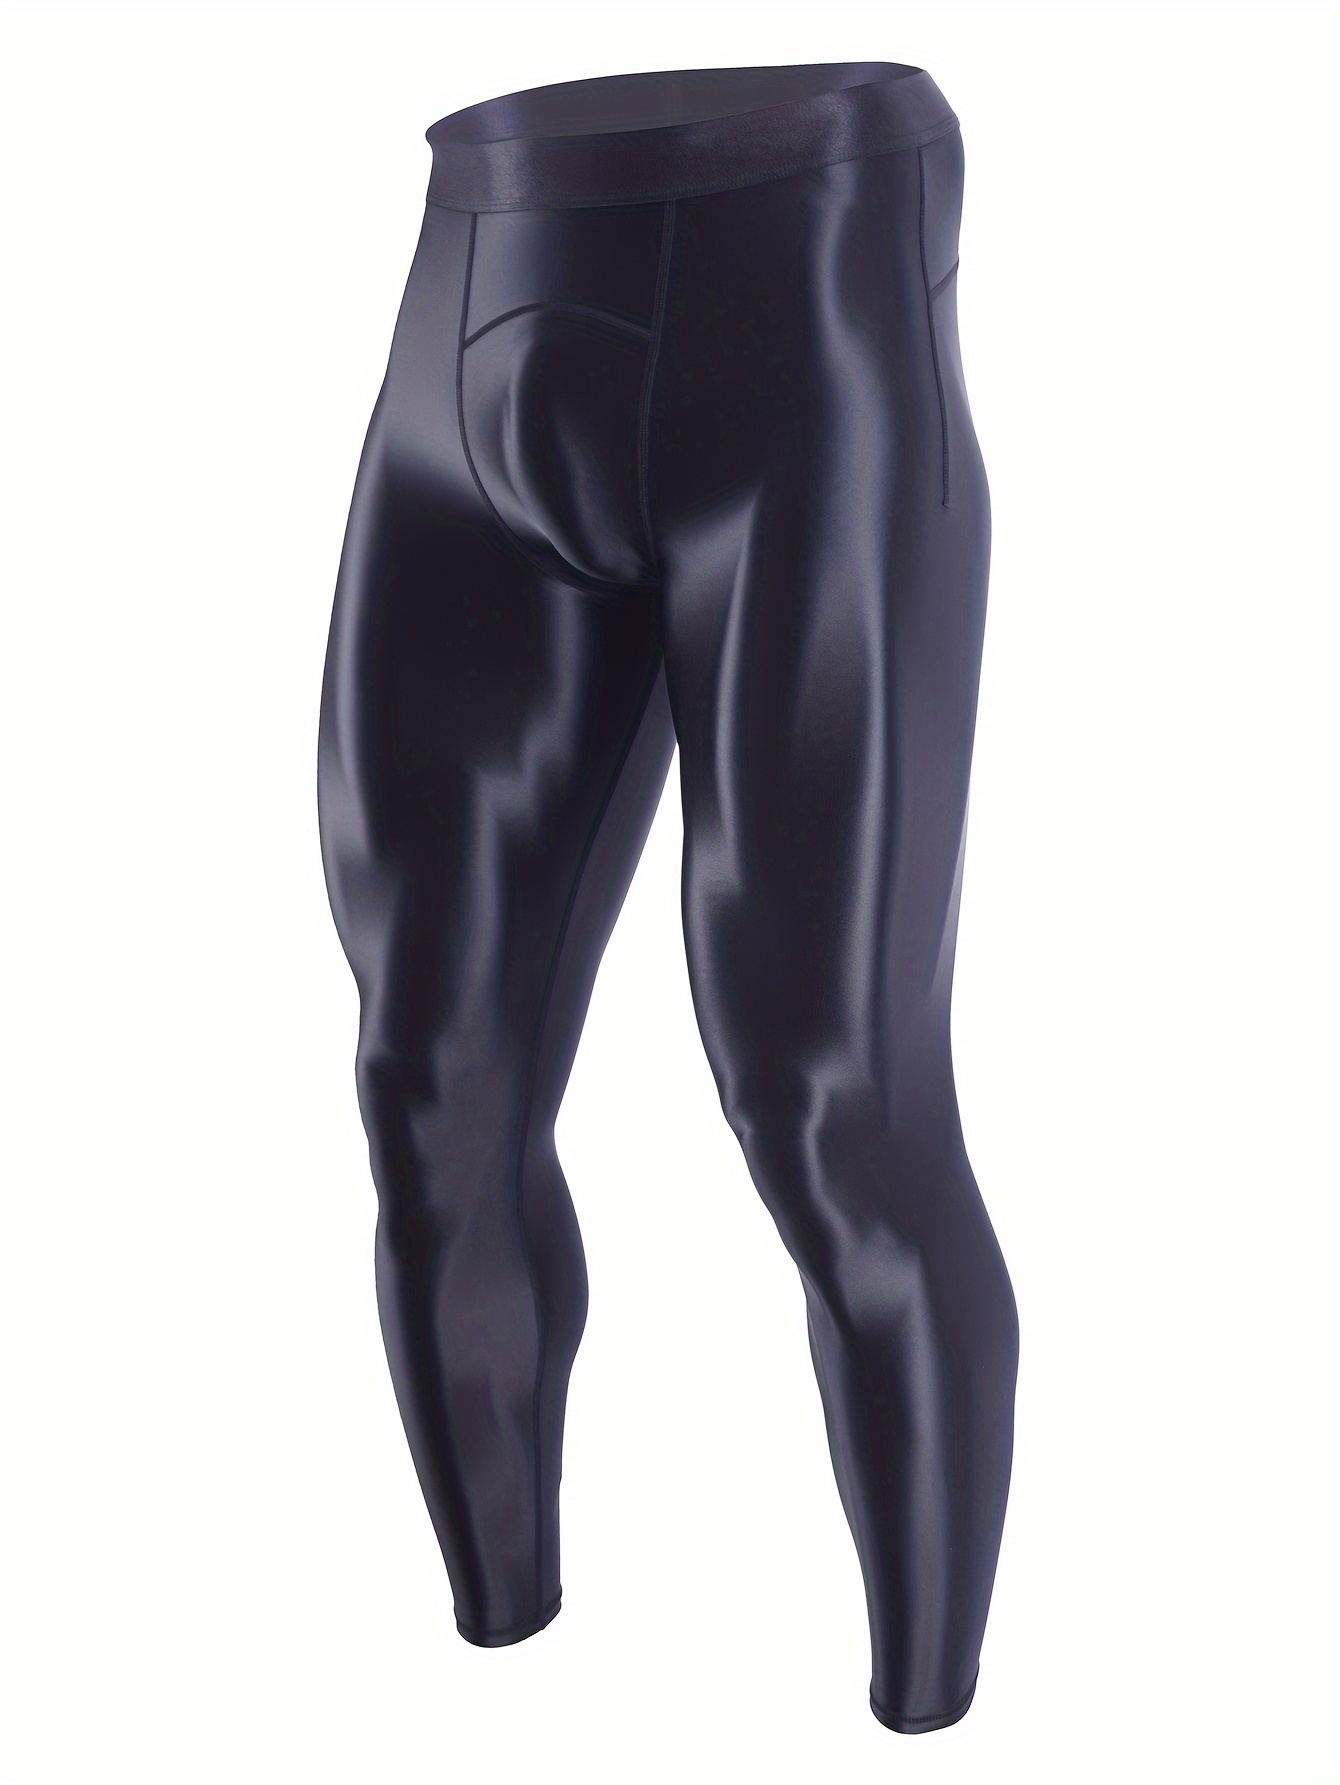 Men's Spandex Leggings Fitness Pants Stretch Low Waist Shiny Tight Gym Wear  Fit